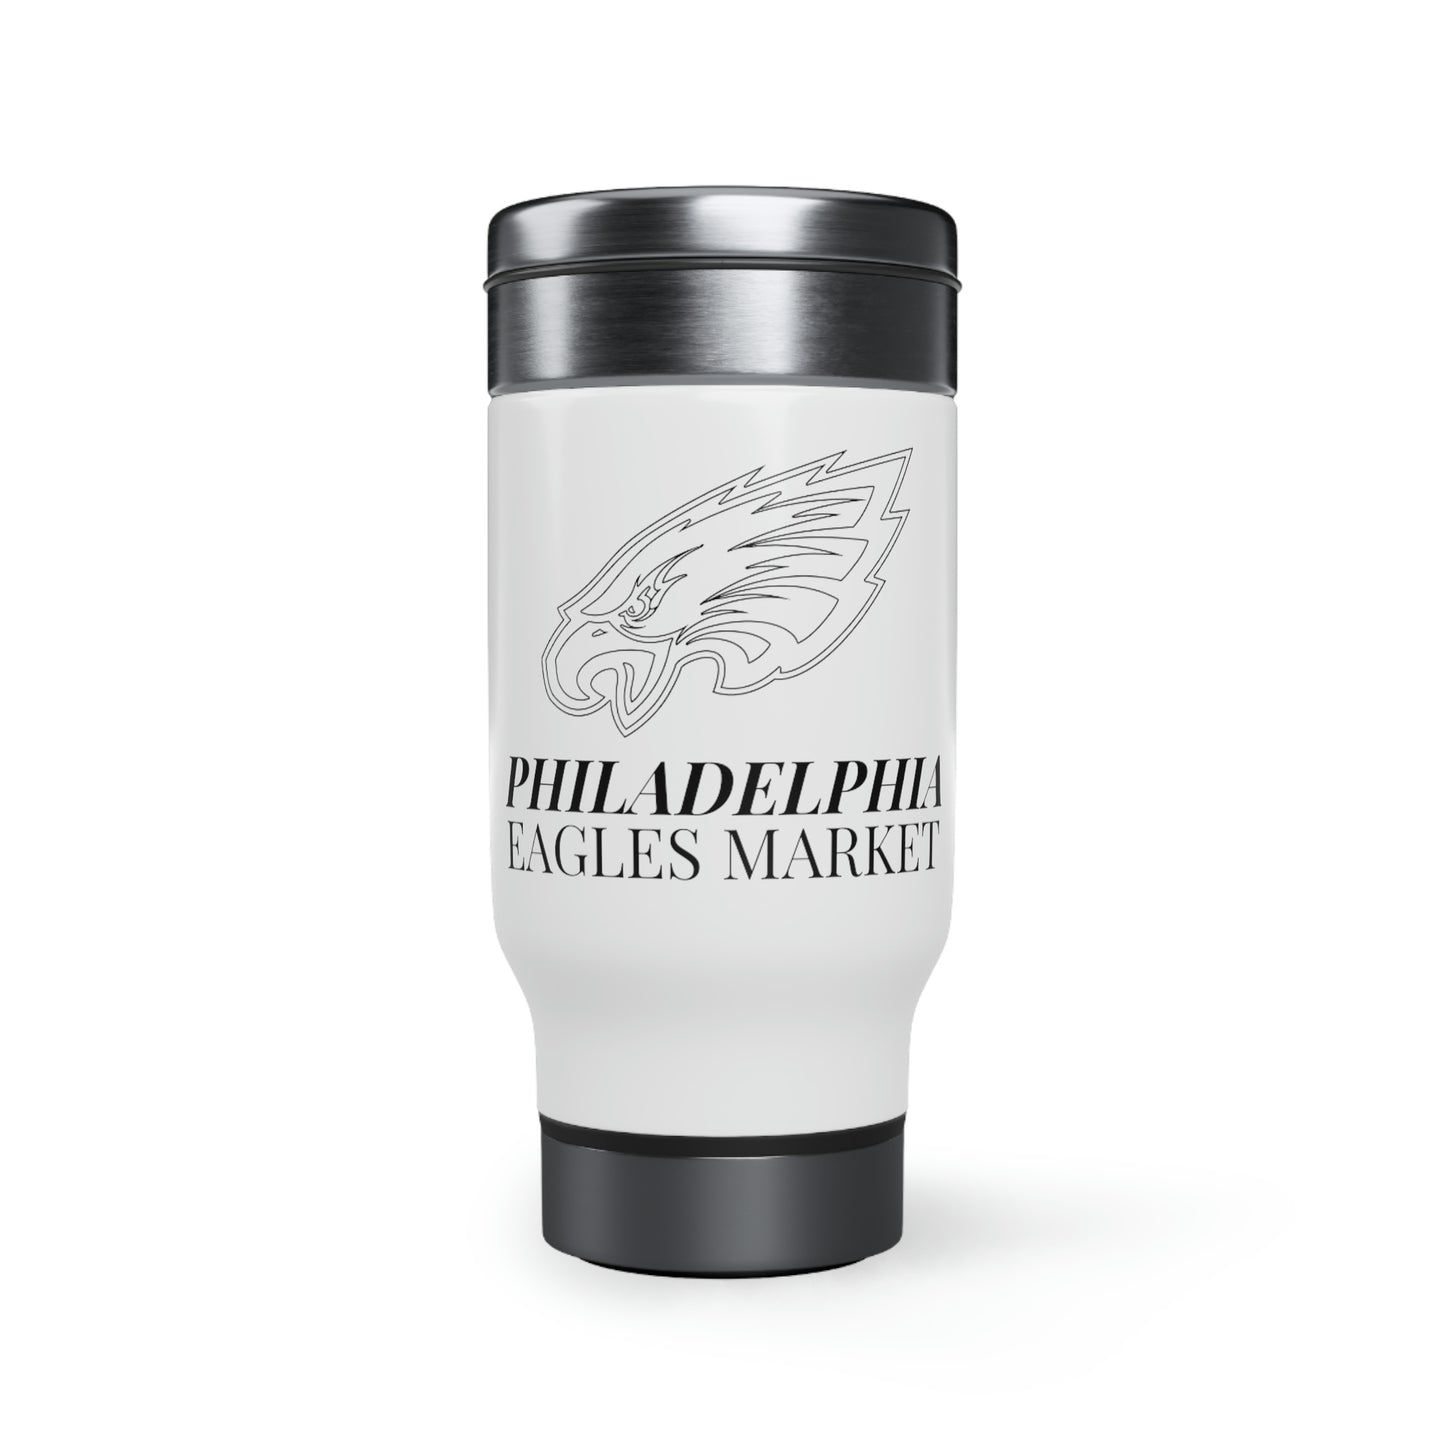 Philadelphia Eagles Market Stainless Steel Travel Mug with Handle, 14oz